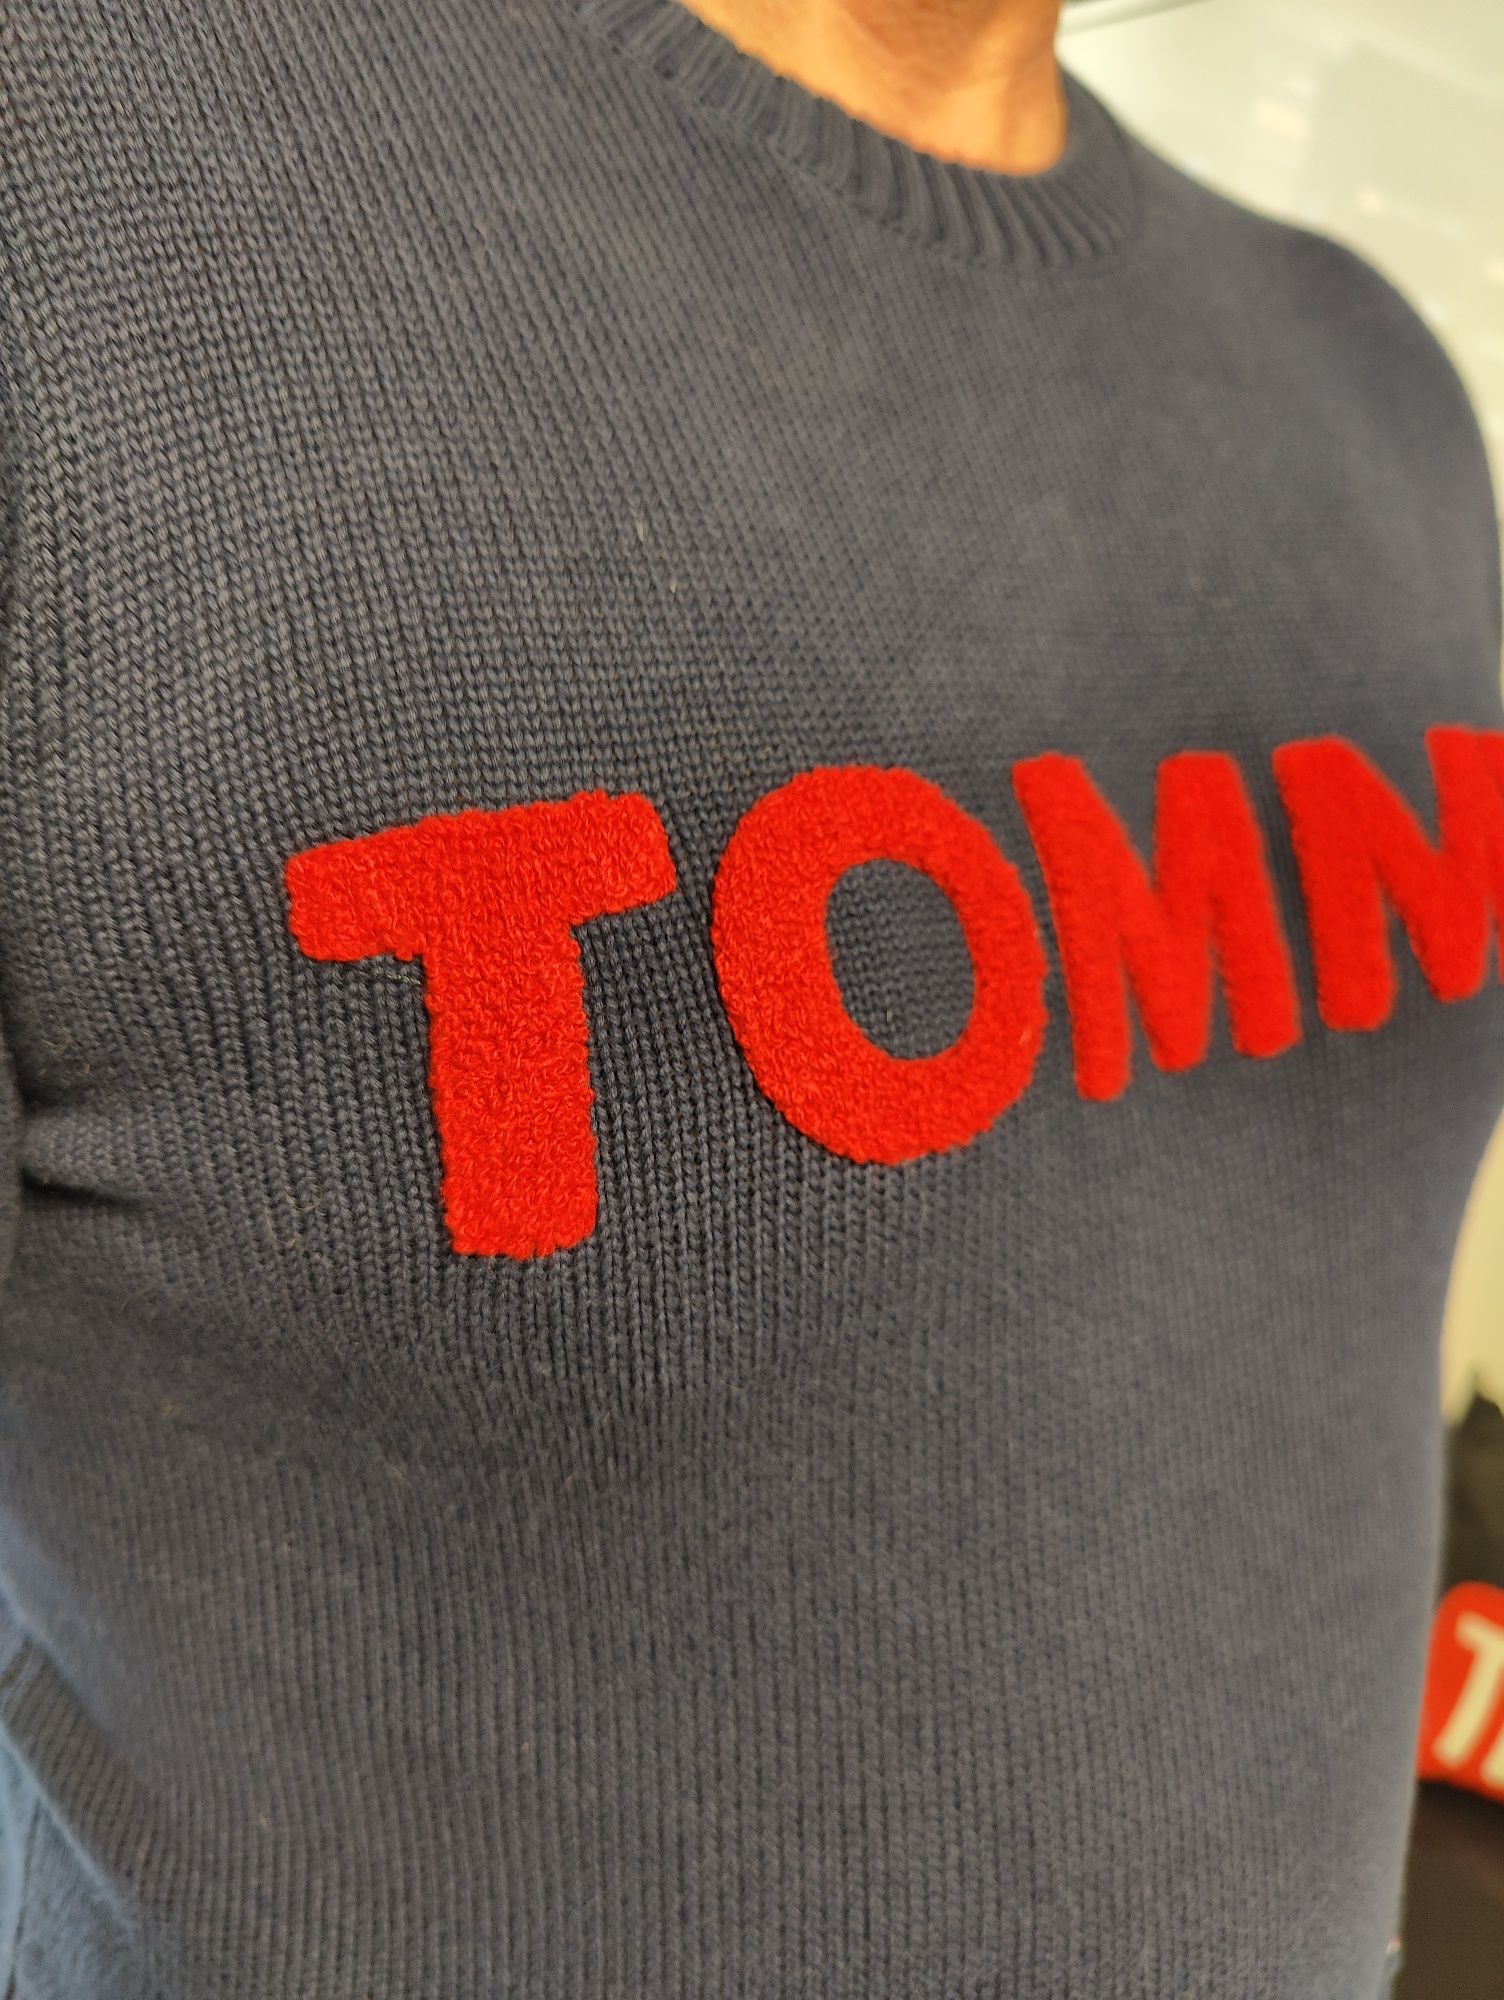 Super model sweterka Tommy Hilfiger rozm L